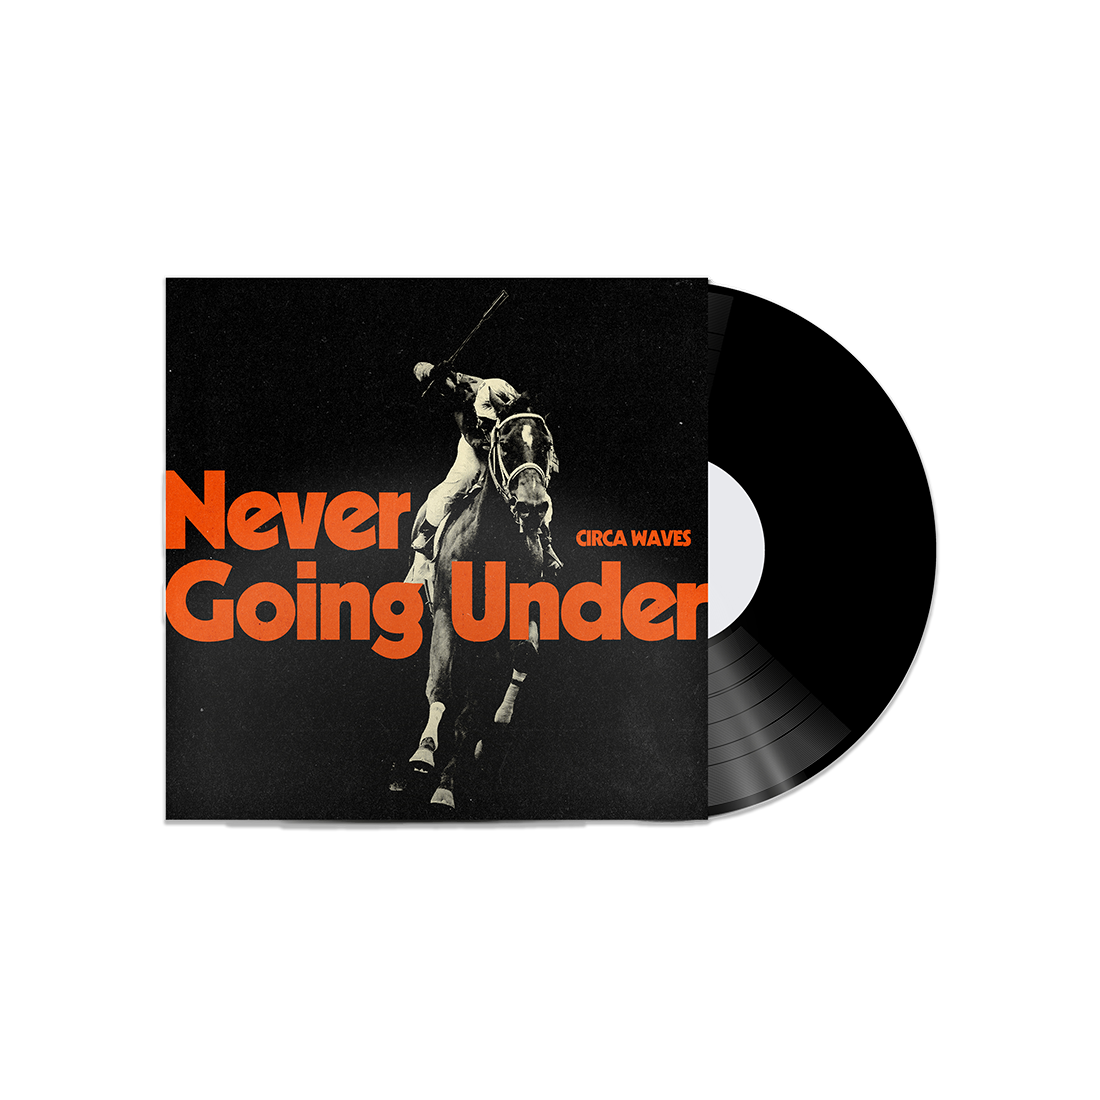 Circa Waves - Never Going Under: Vinyl LP